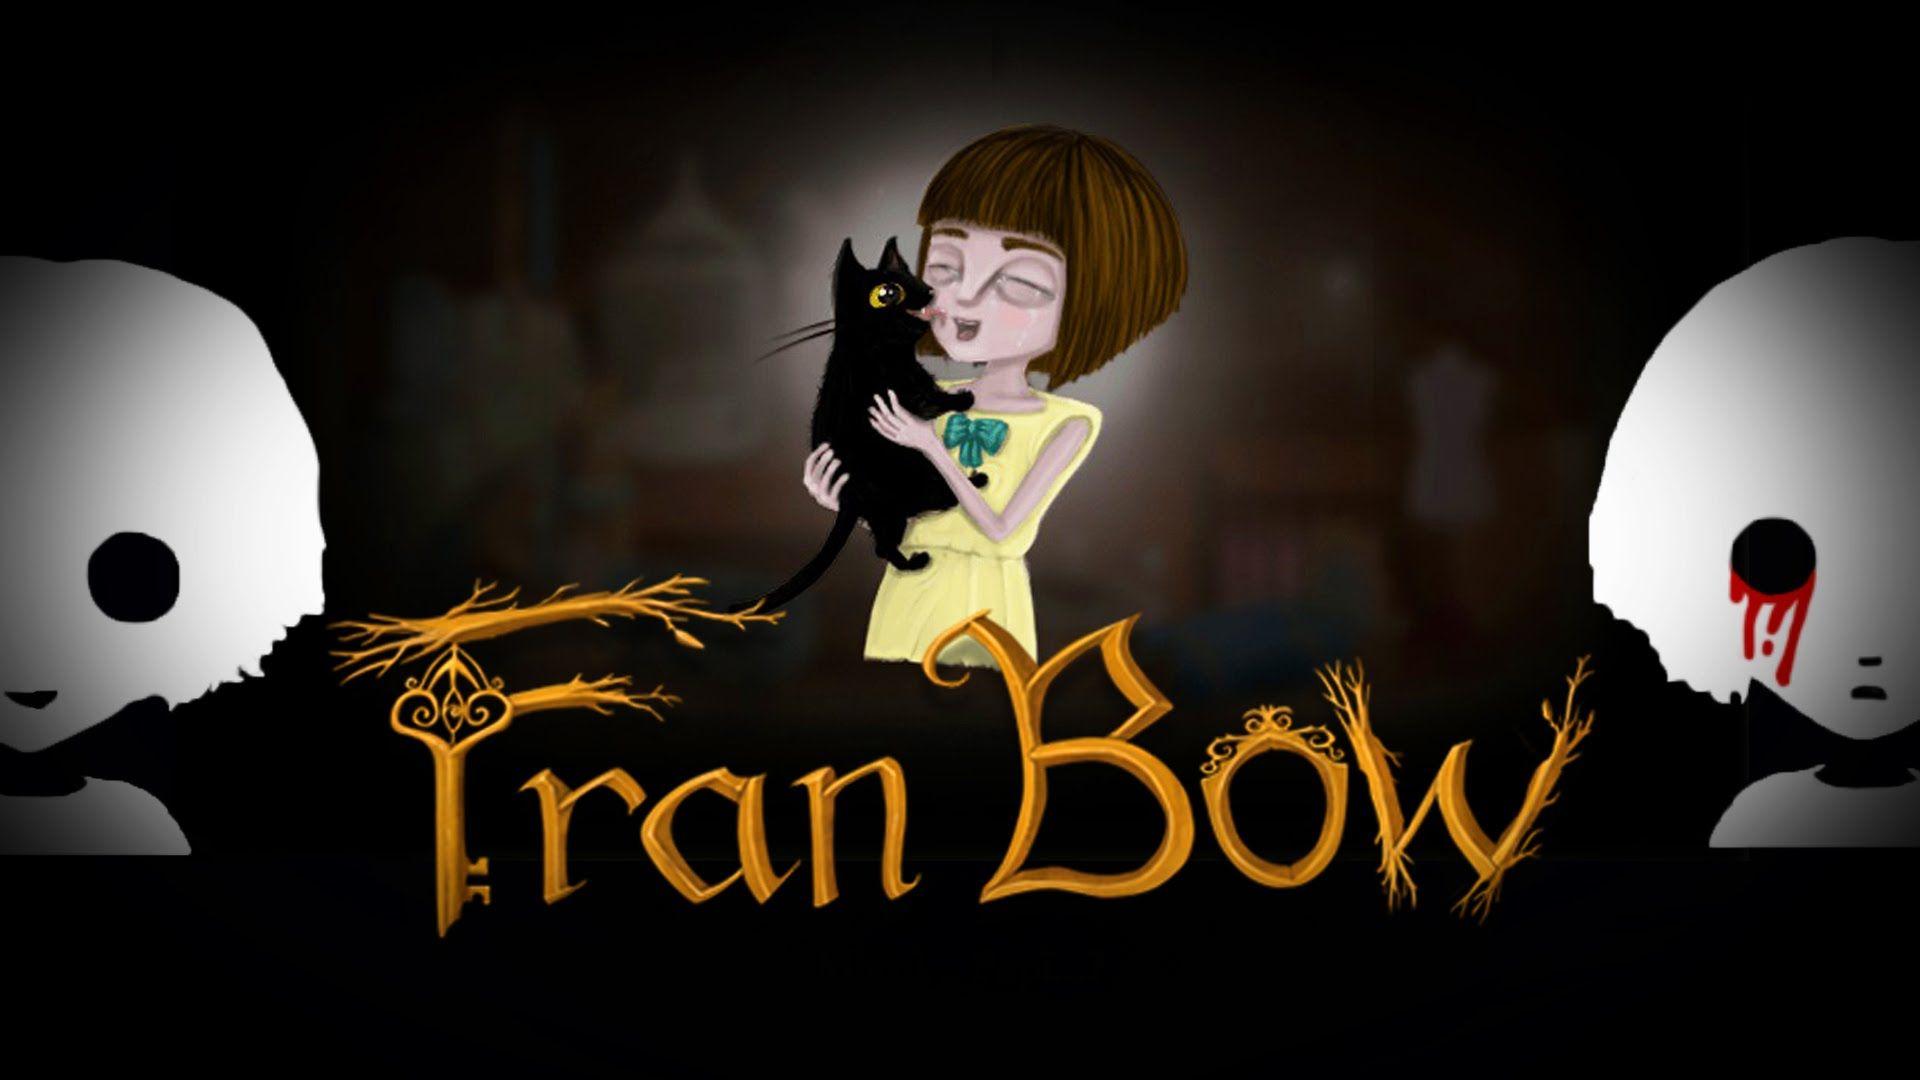 FRAN BOW []üstere Vergangenheit. Let's Play Fran Bow